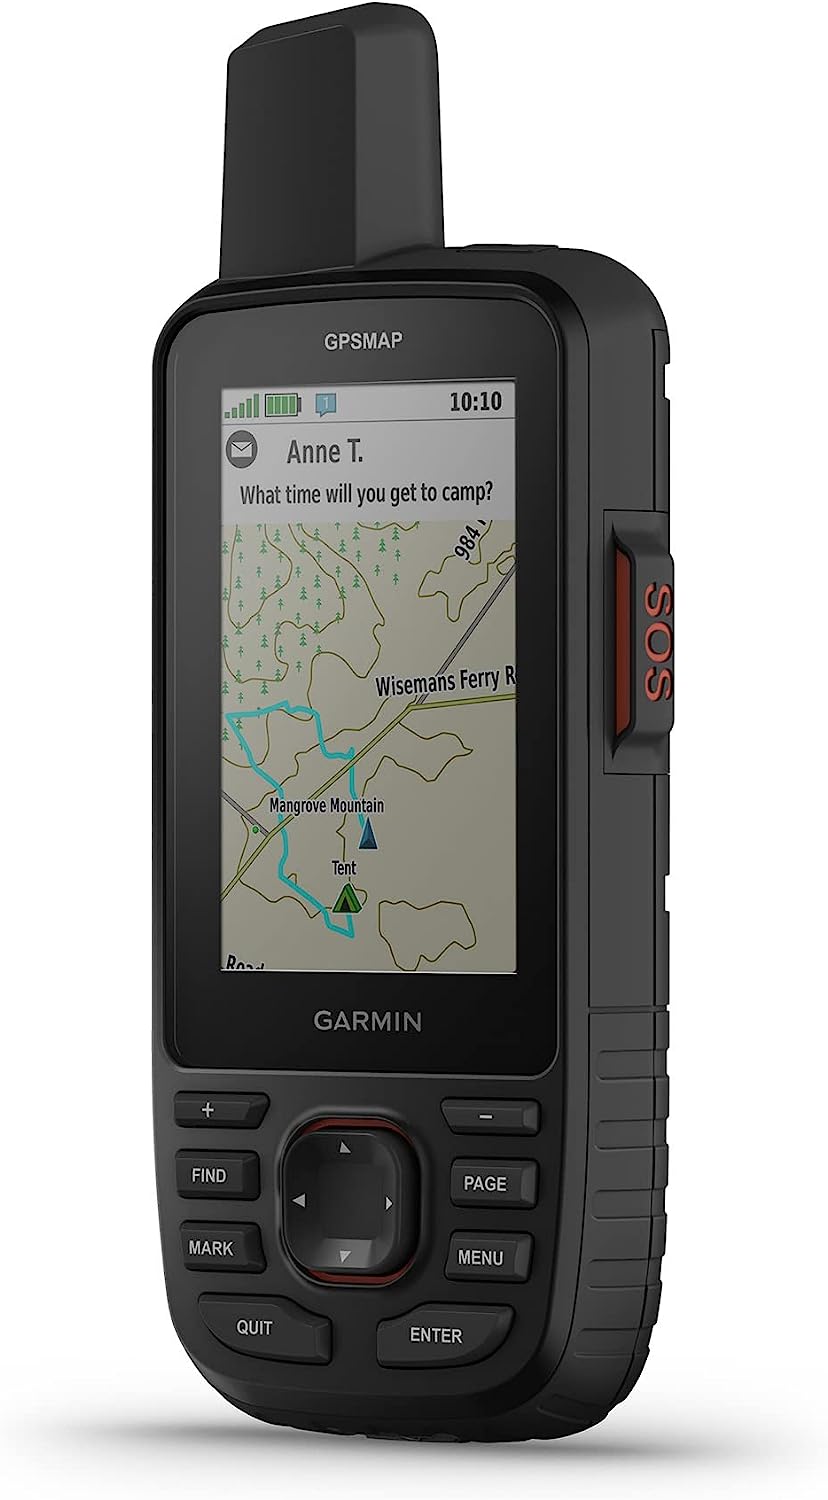 Garmin GPSMAP 67i Rugged GPS Handheld with inReach Satellite Technology